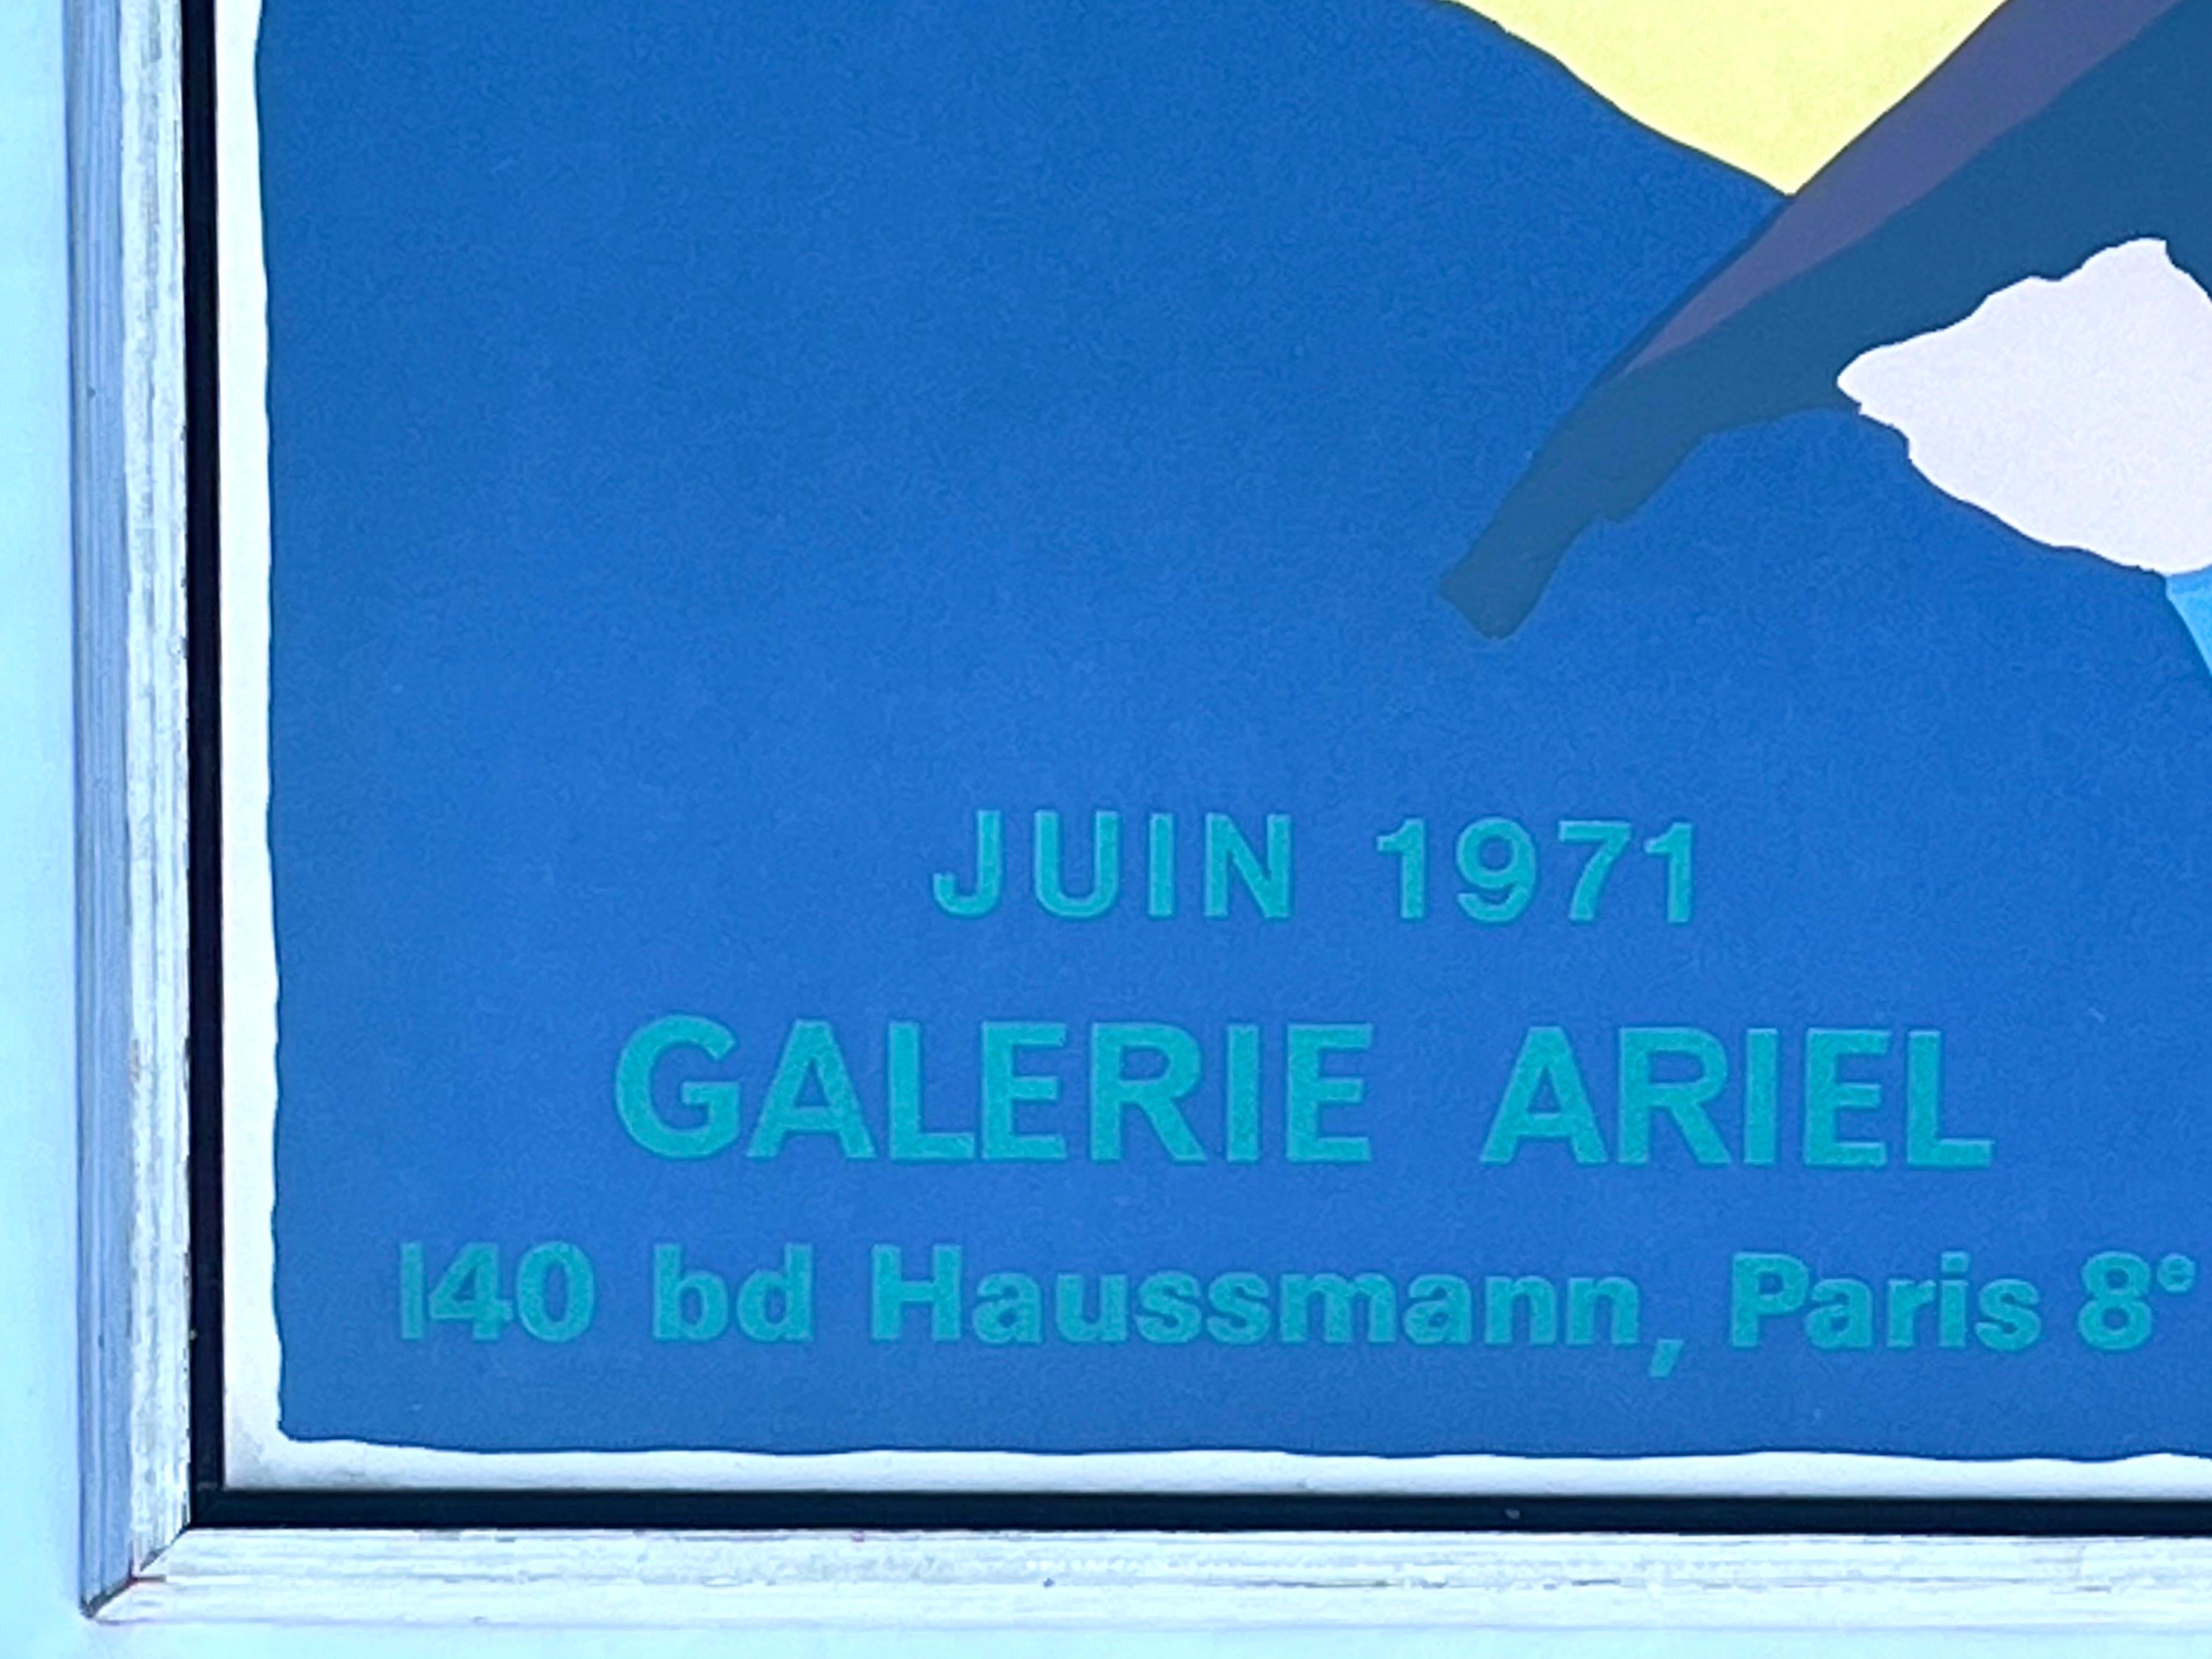 Glass Karel Appel Galerie Ariel 1971 Paris Blvd Haussmann Exhibition Poster by SMI